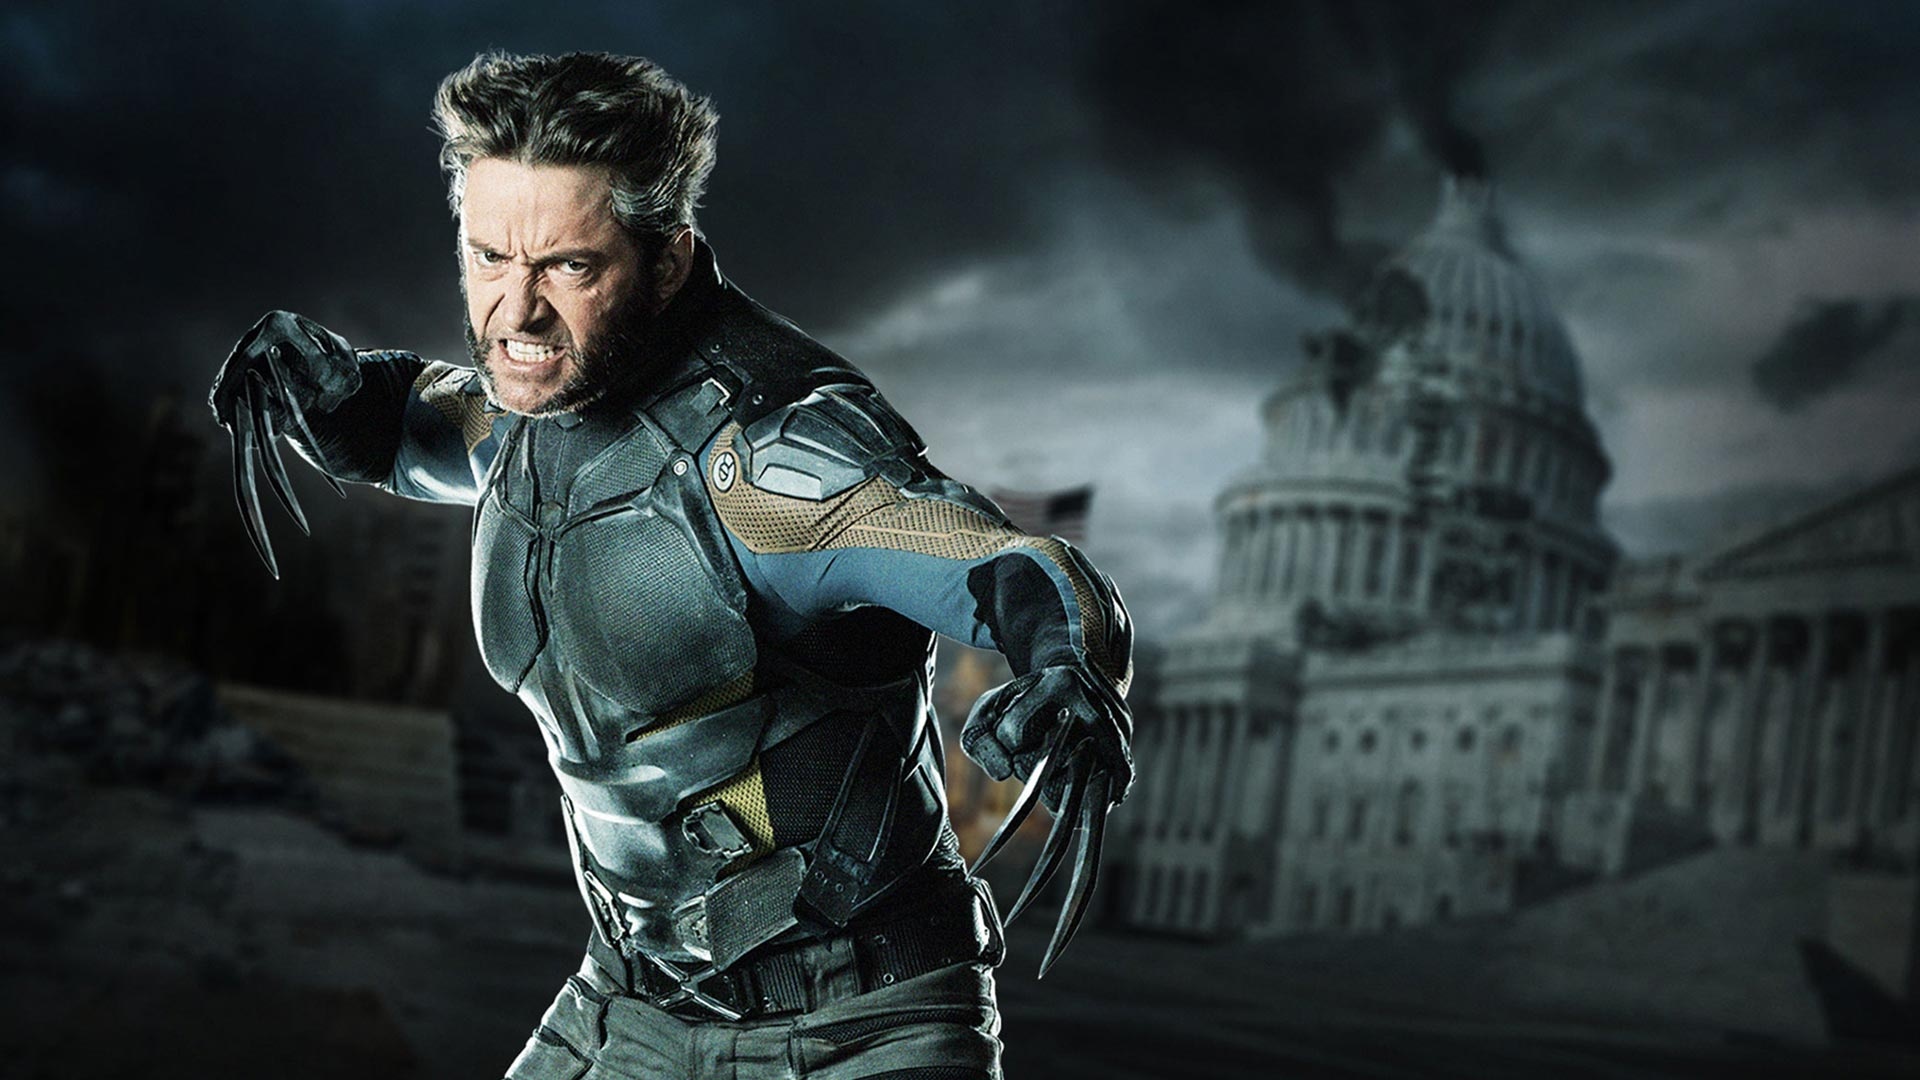 X-Men: Days of Future Past, Wallpaper featuring Wolverine, X-Men fandom, Mutant superhero, 1920x1080 Full HD Desktop